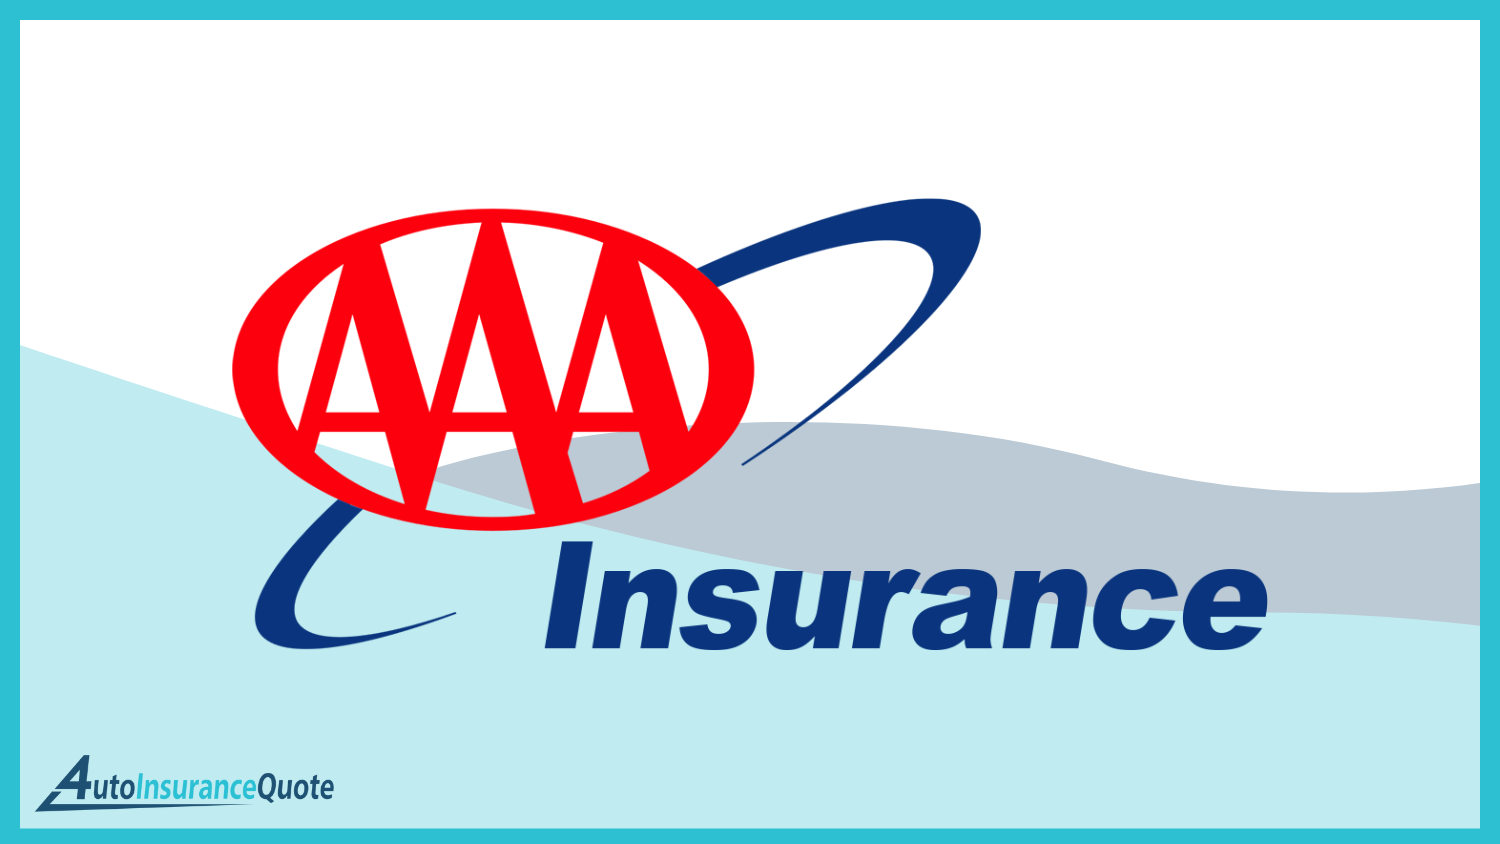 AAA: Best Roadside Assistance Coverage